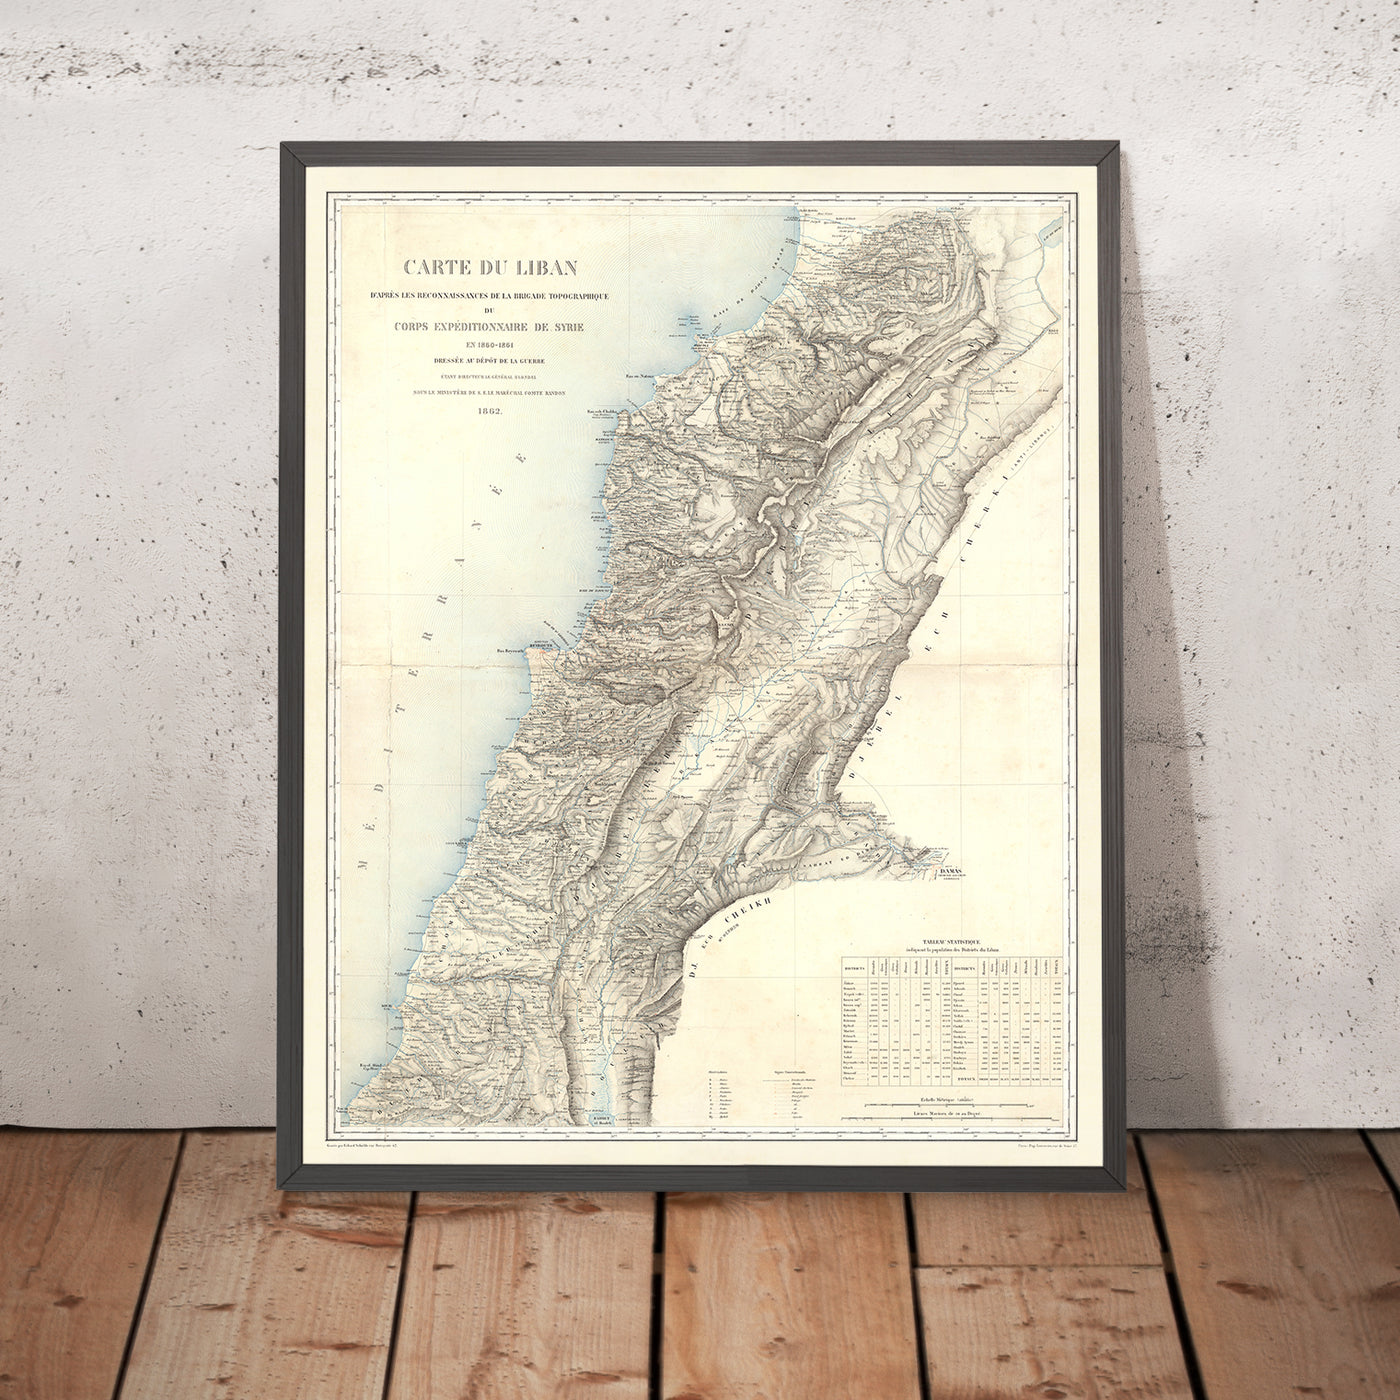 Old Map of Lebanon by Depot De La Guerre, 1862: Beirut, Tripoli, Sidon, Tyre, Byblos